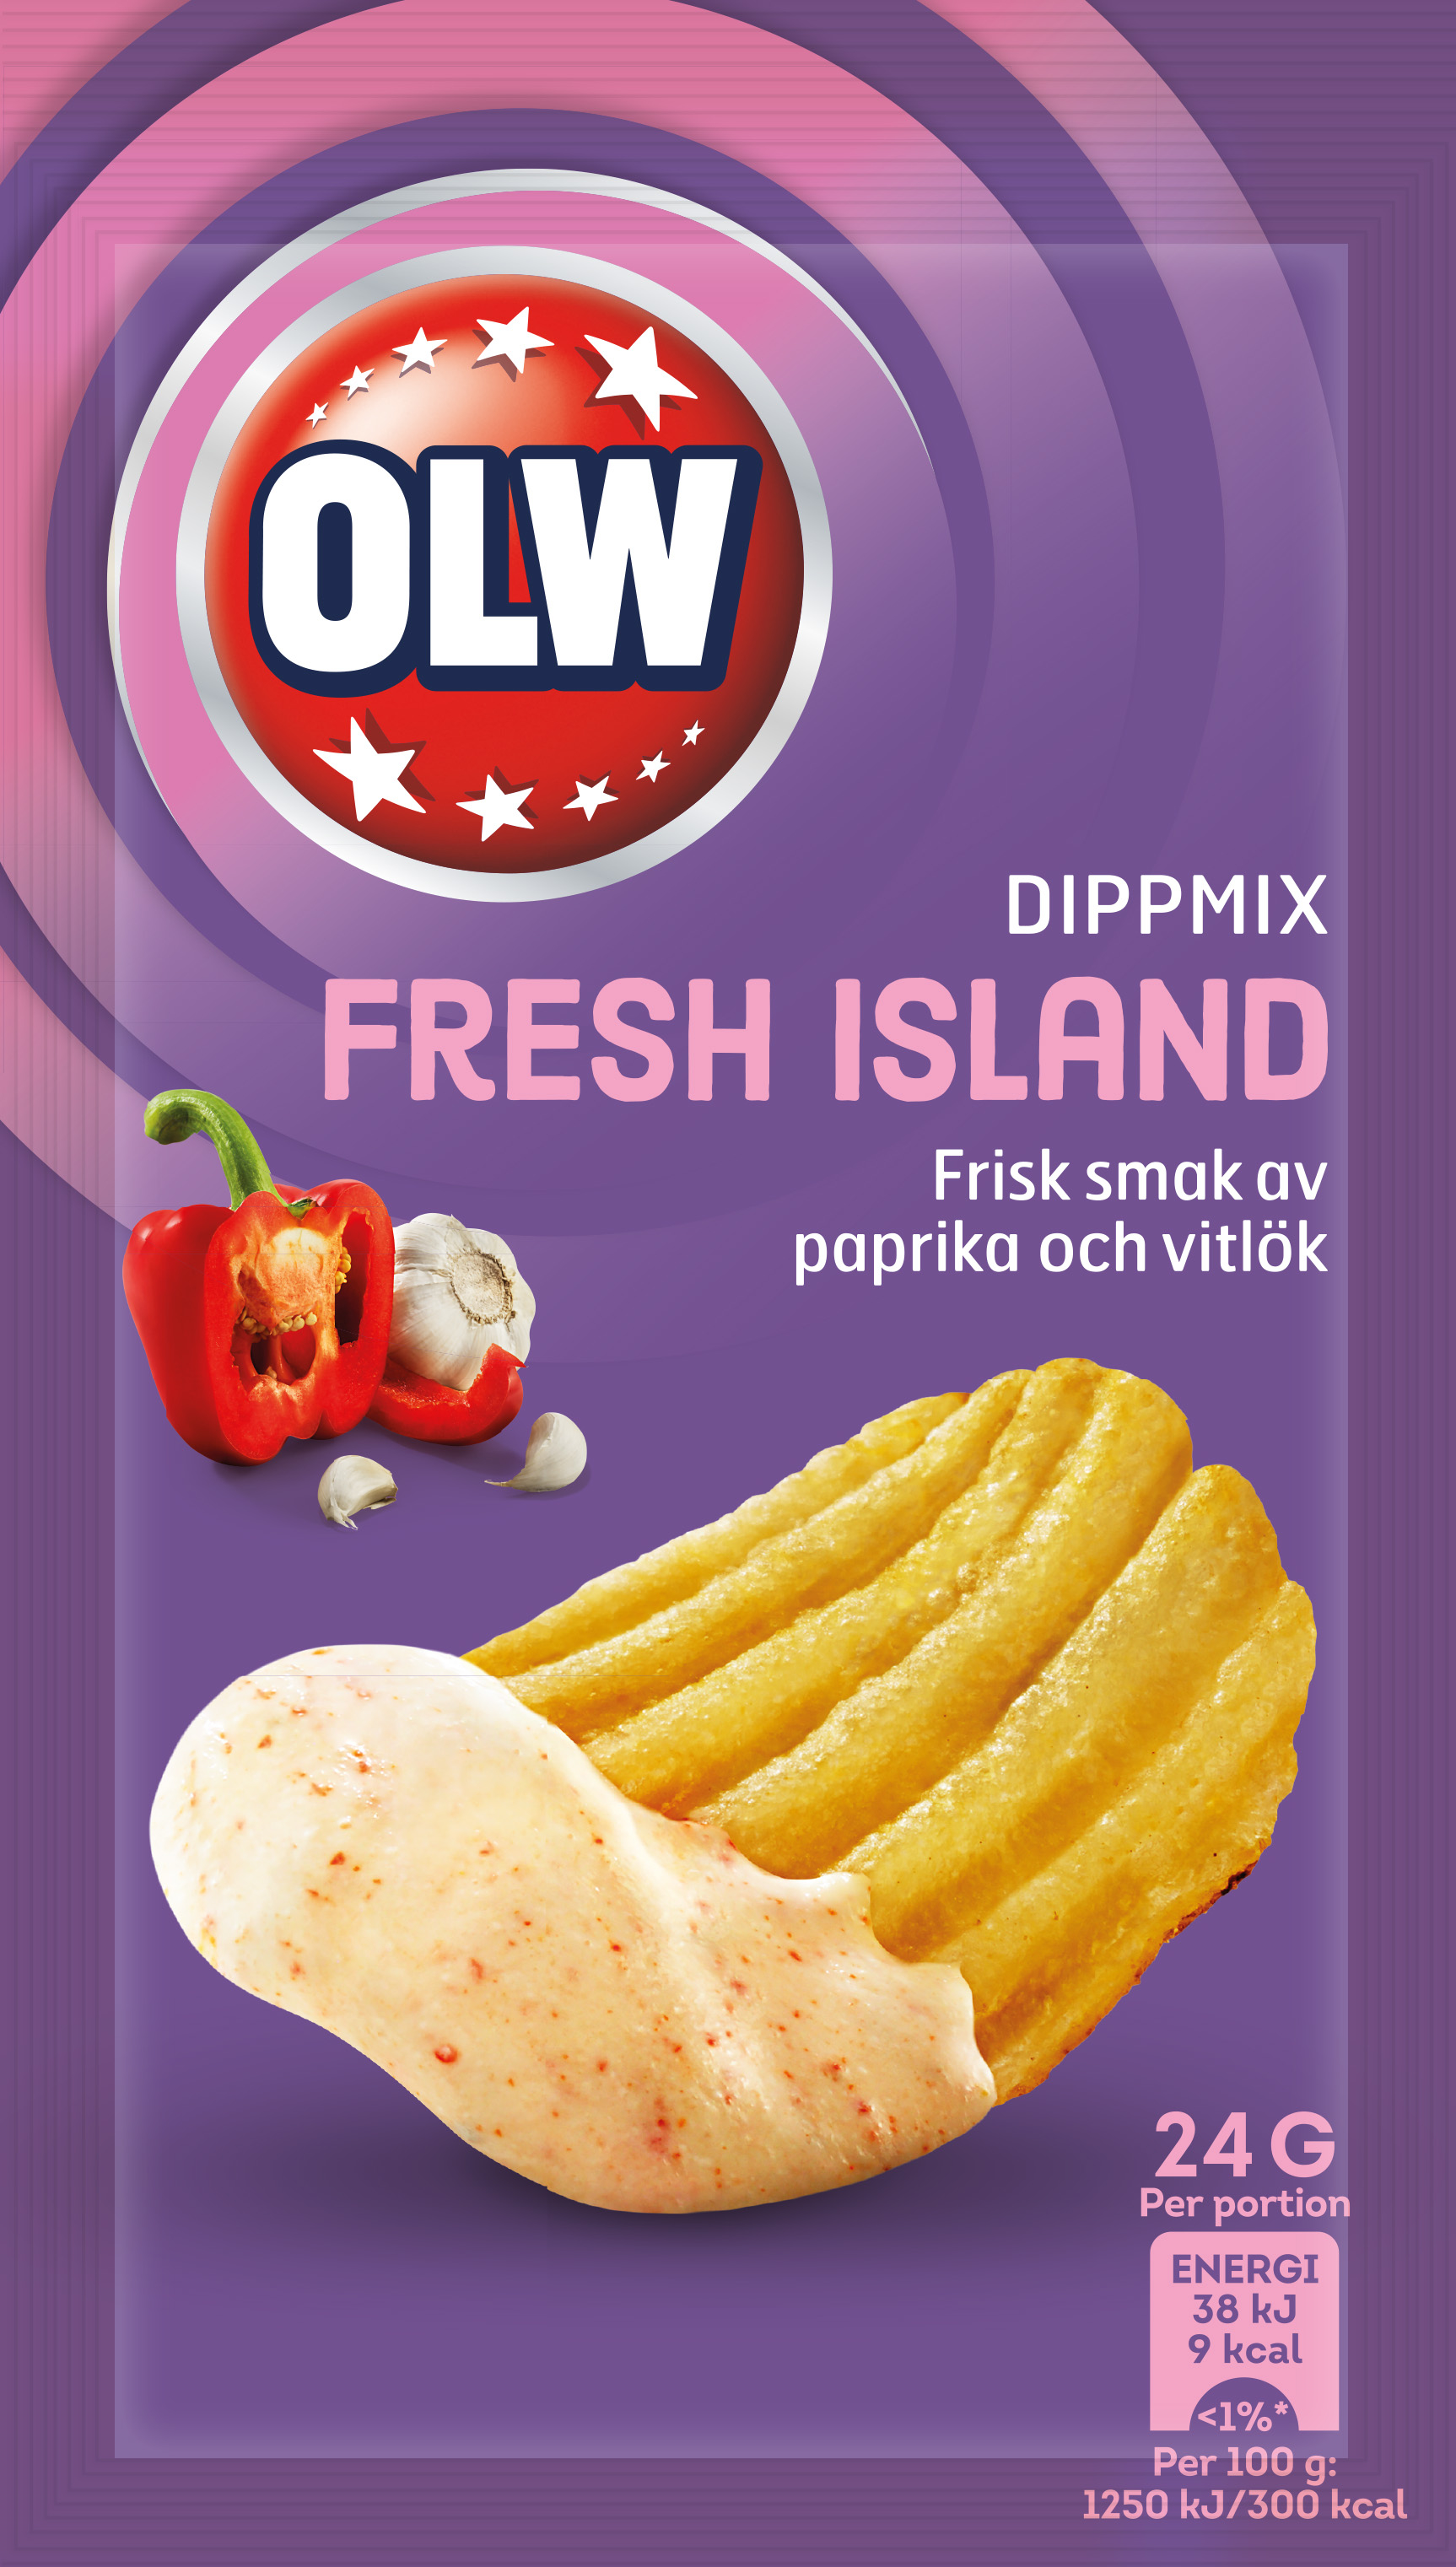 Handla Dipmix Fresh Island, 24 g från OLW online på Mathem